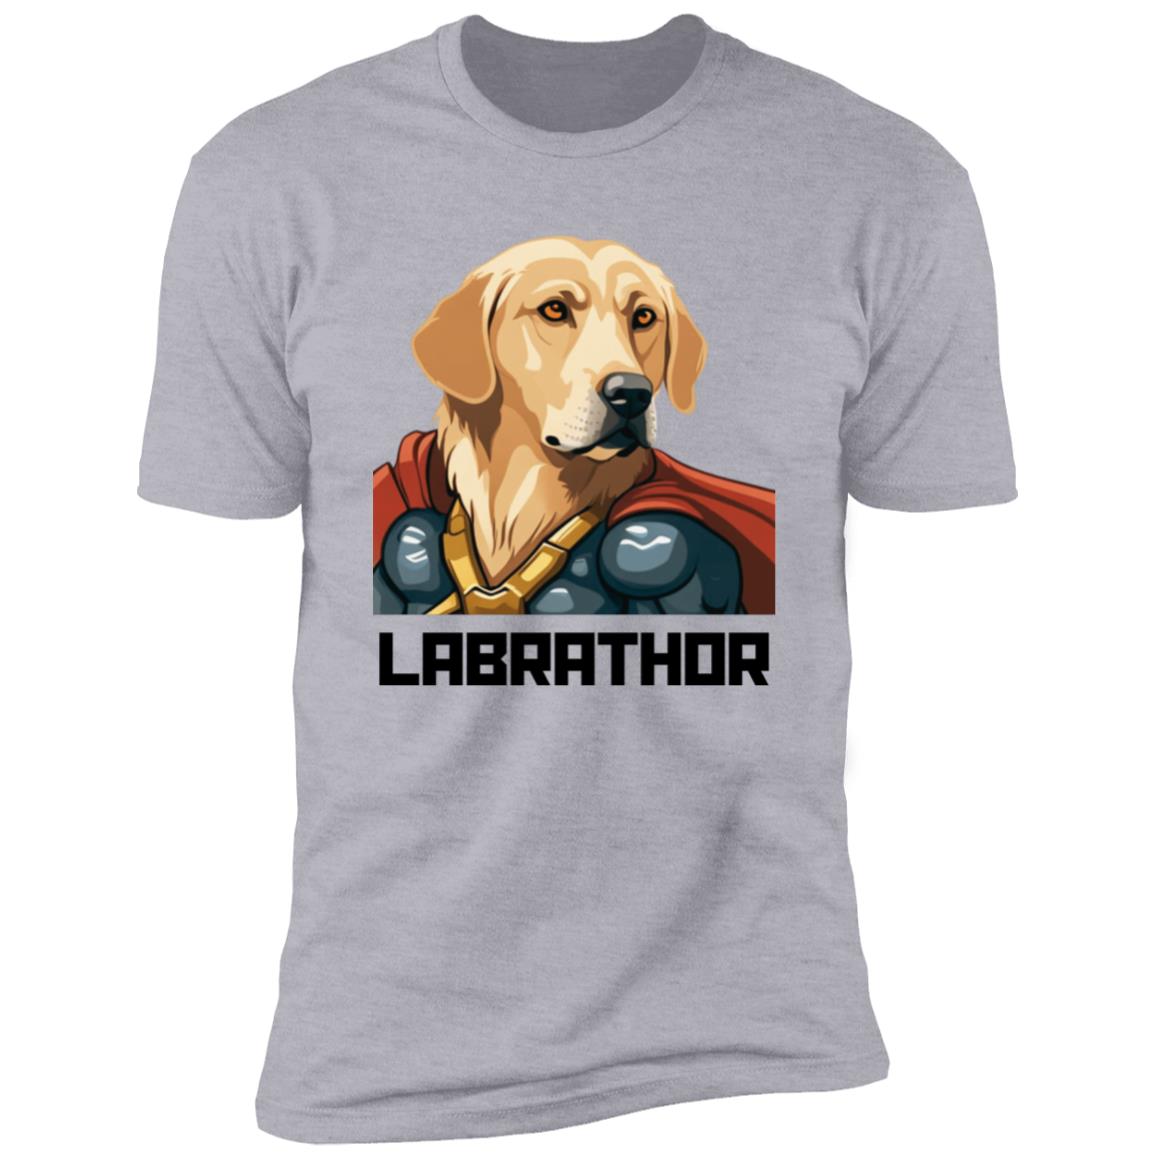 LabraThor Funny Dog T-Shirt